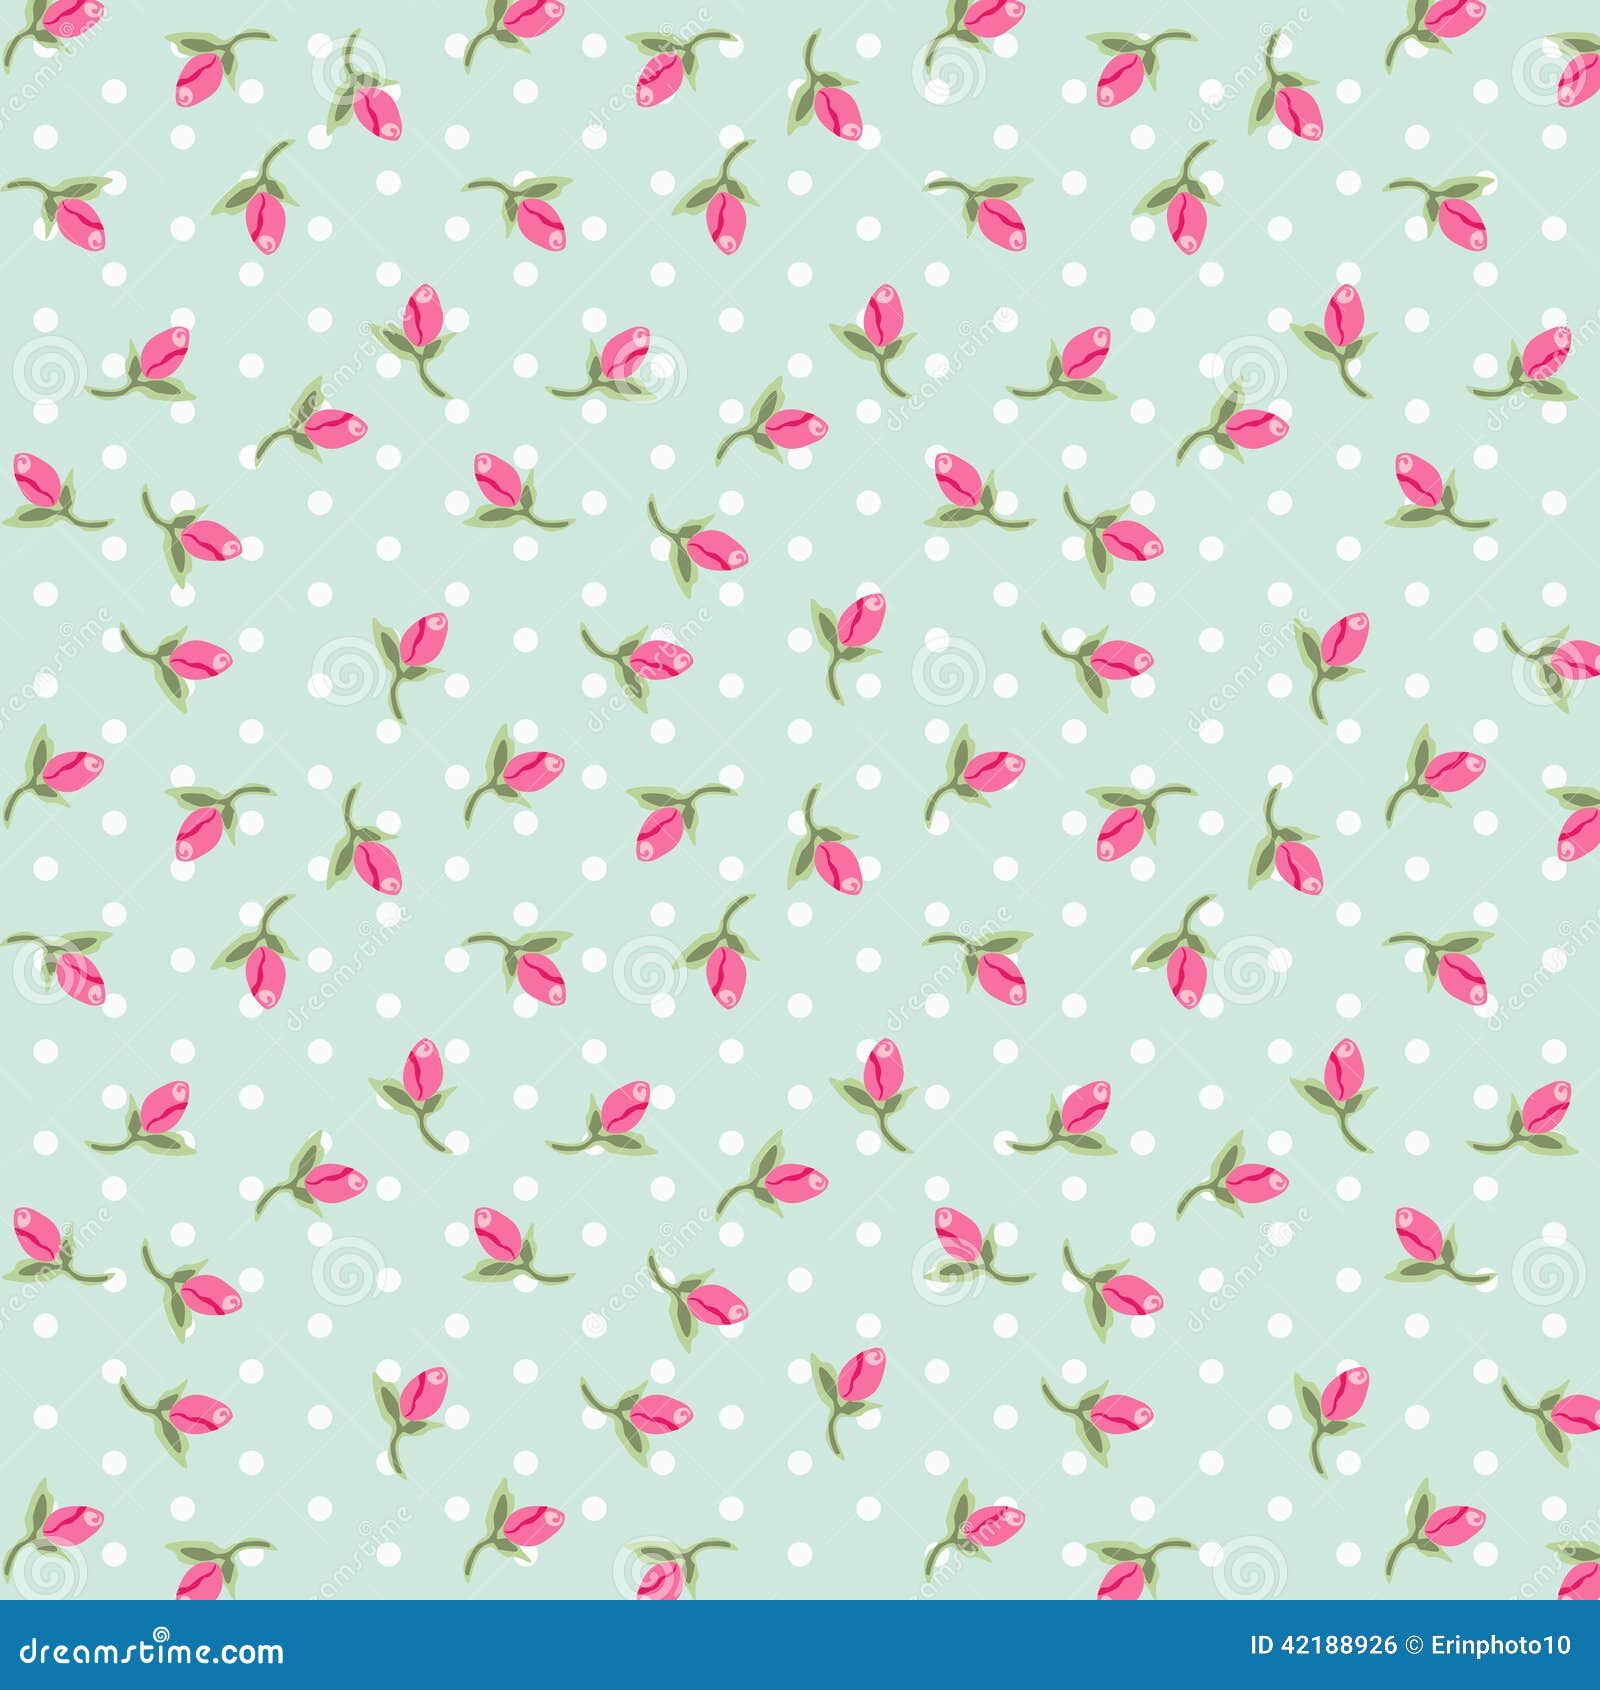 rosebuds pattern